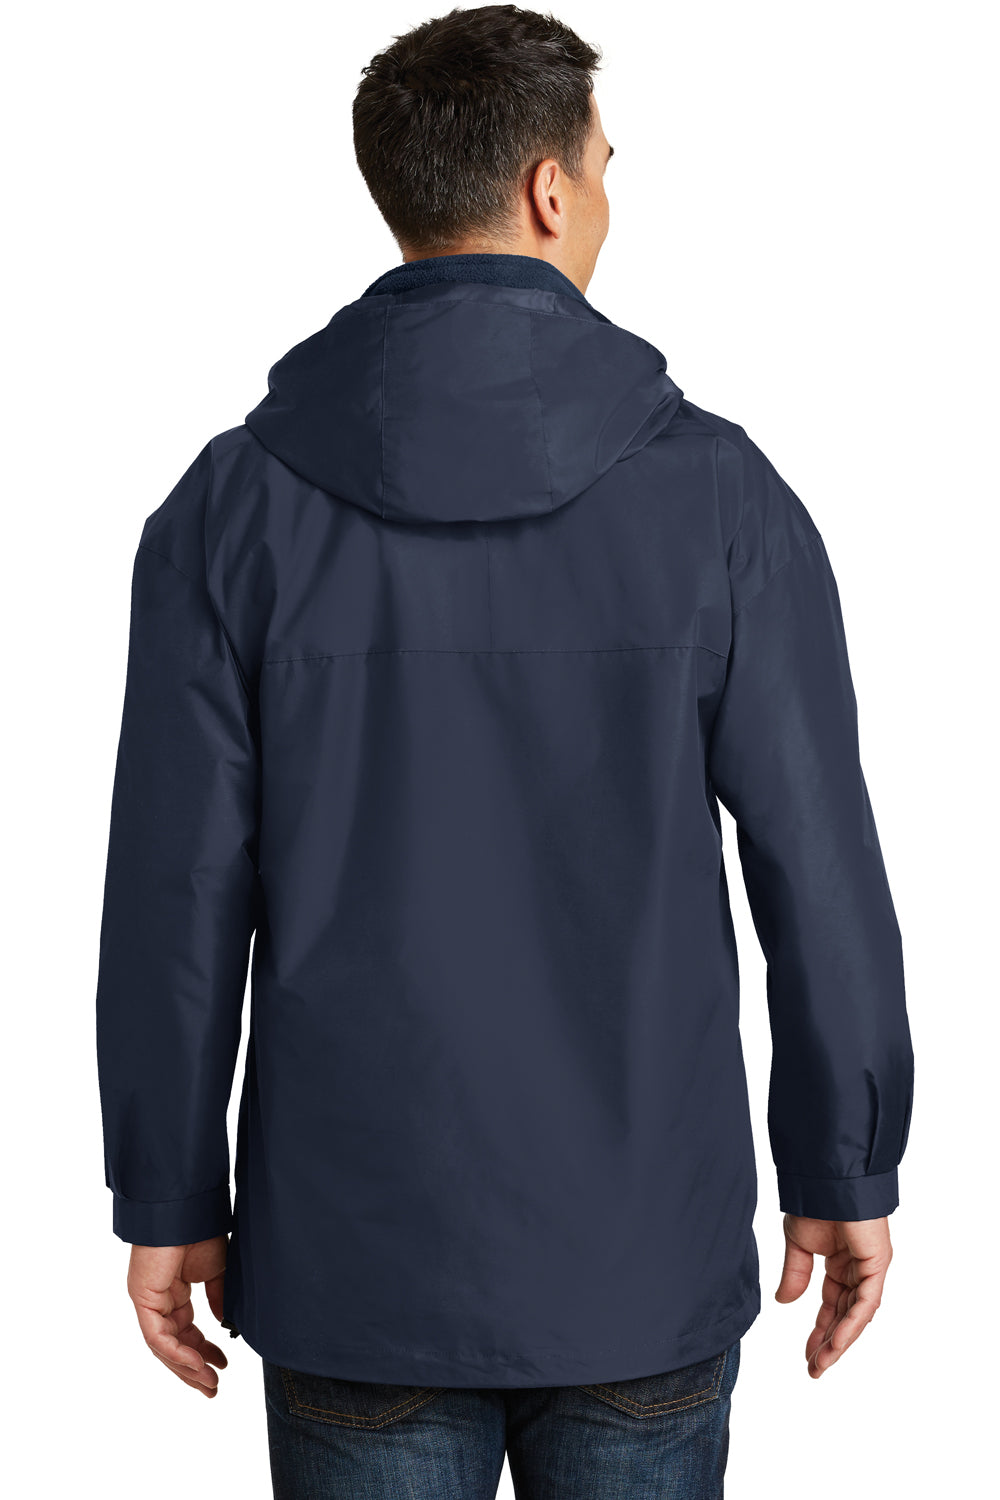 Port Authority J777 Mens 3-in-1 Wind & Water Resistant Full Zip Hooded Jacket Navy Blue Back